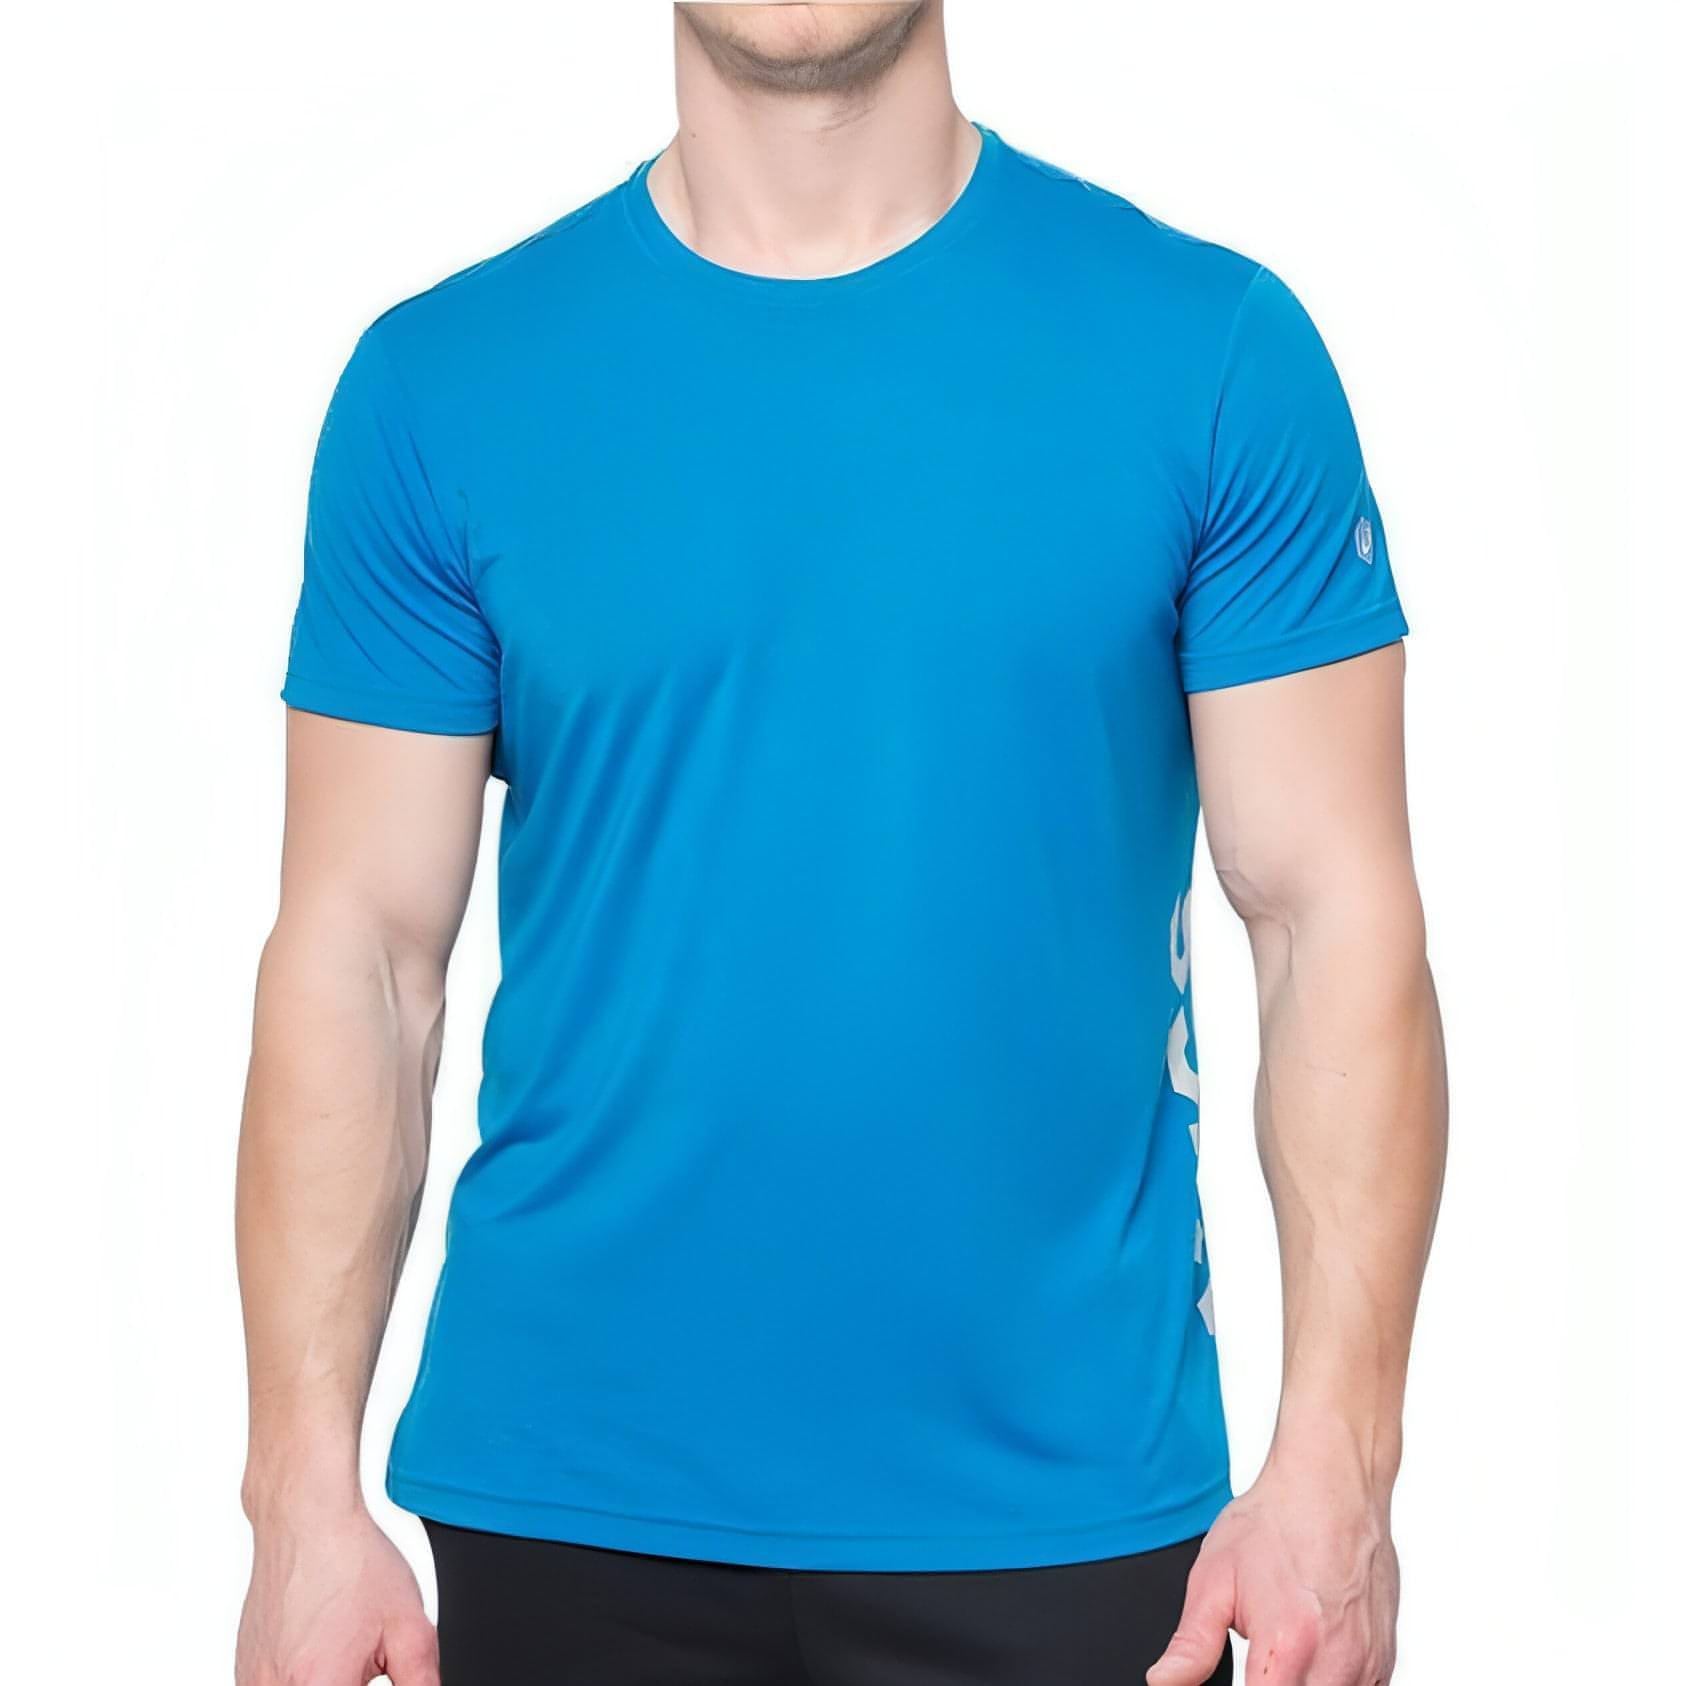 Asics ESNT DBL GPX Short Sleeve Mens Training Top - Blue - Start Fitness